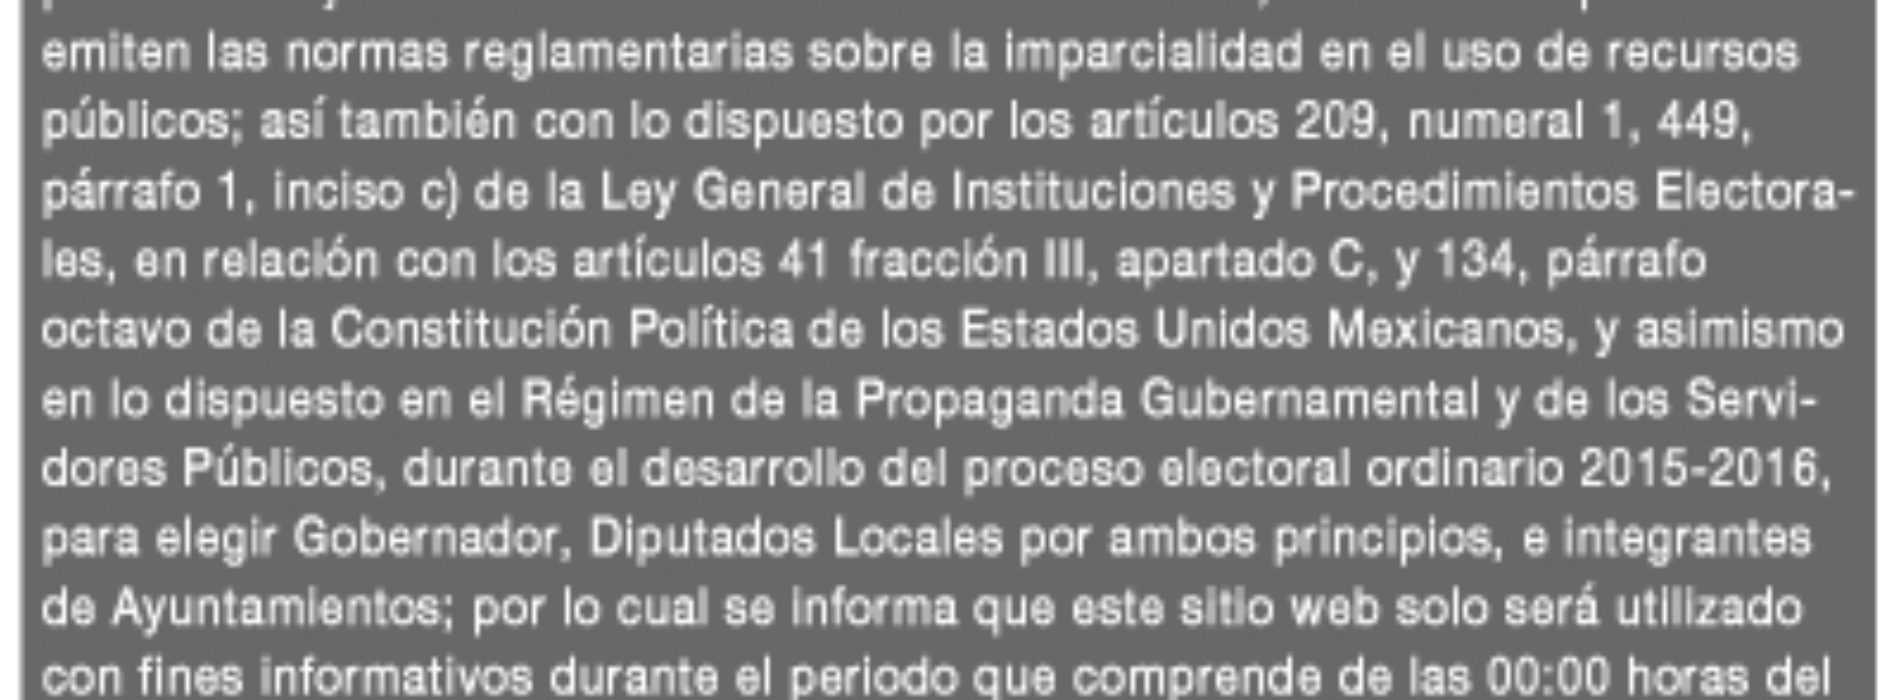 Concluye SAPAO mantenimiento del pozo “Emiliano Zapata”